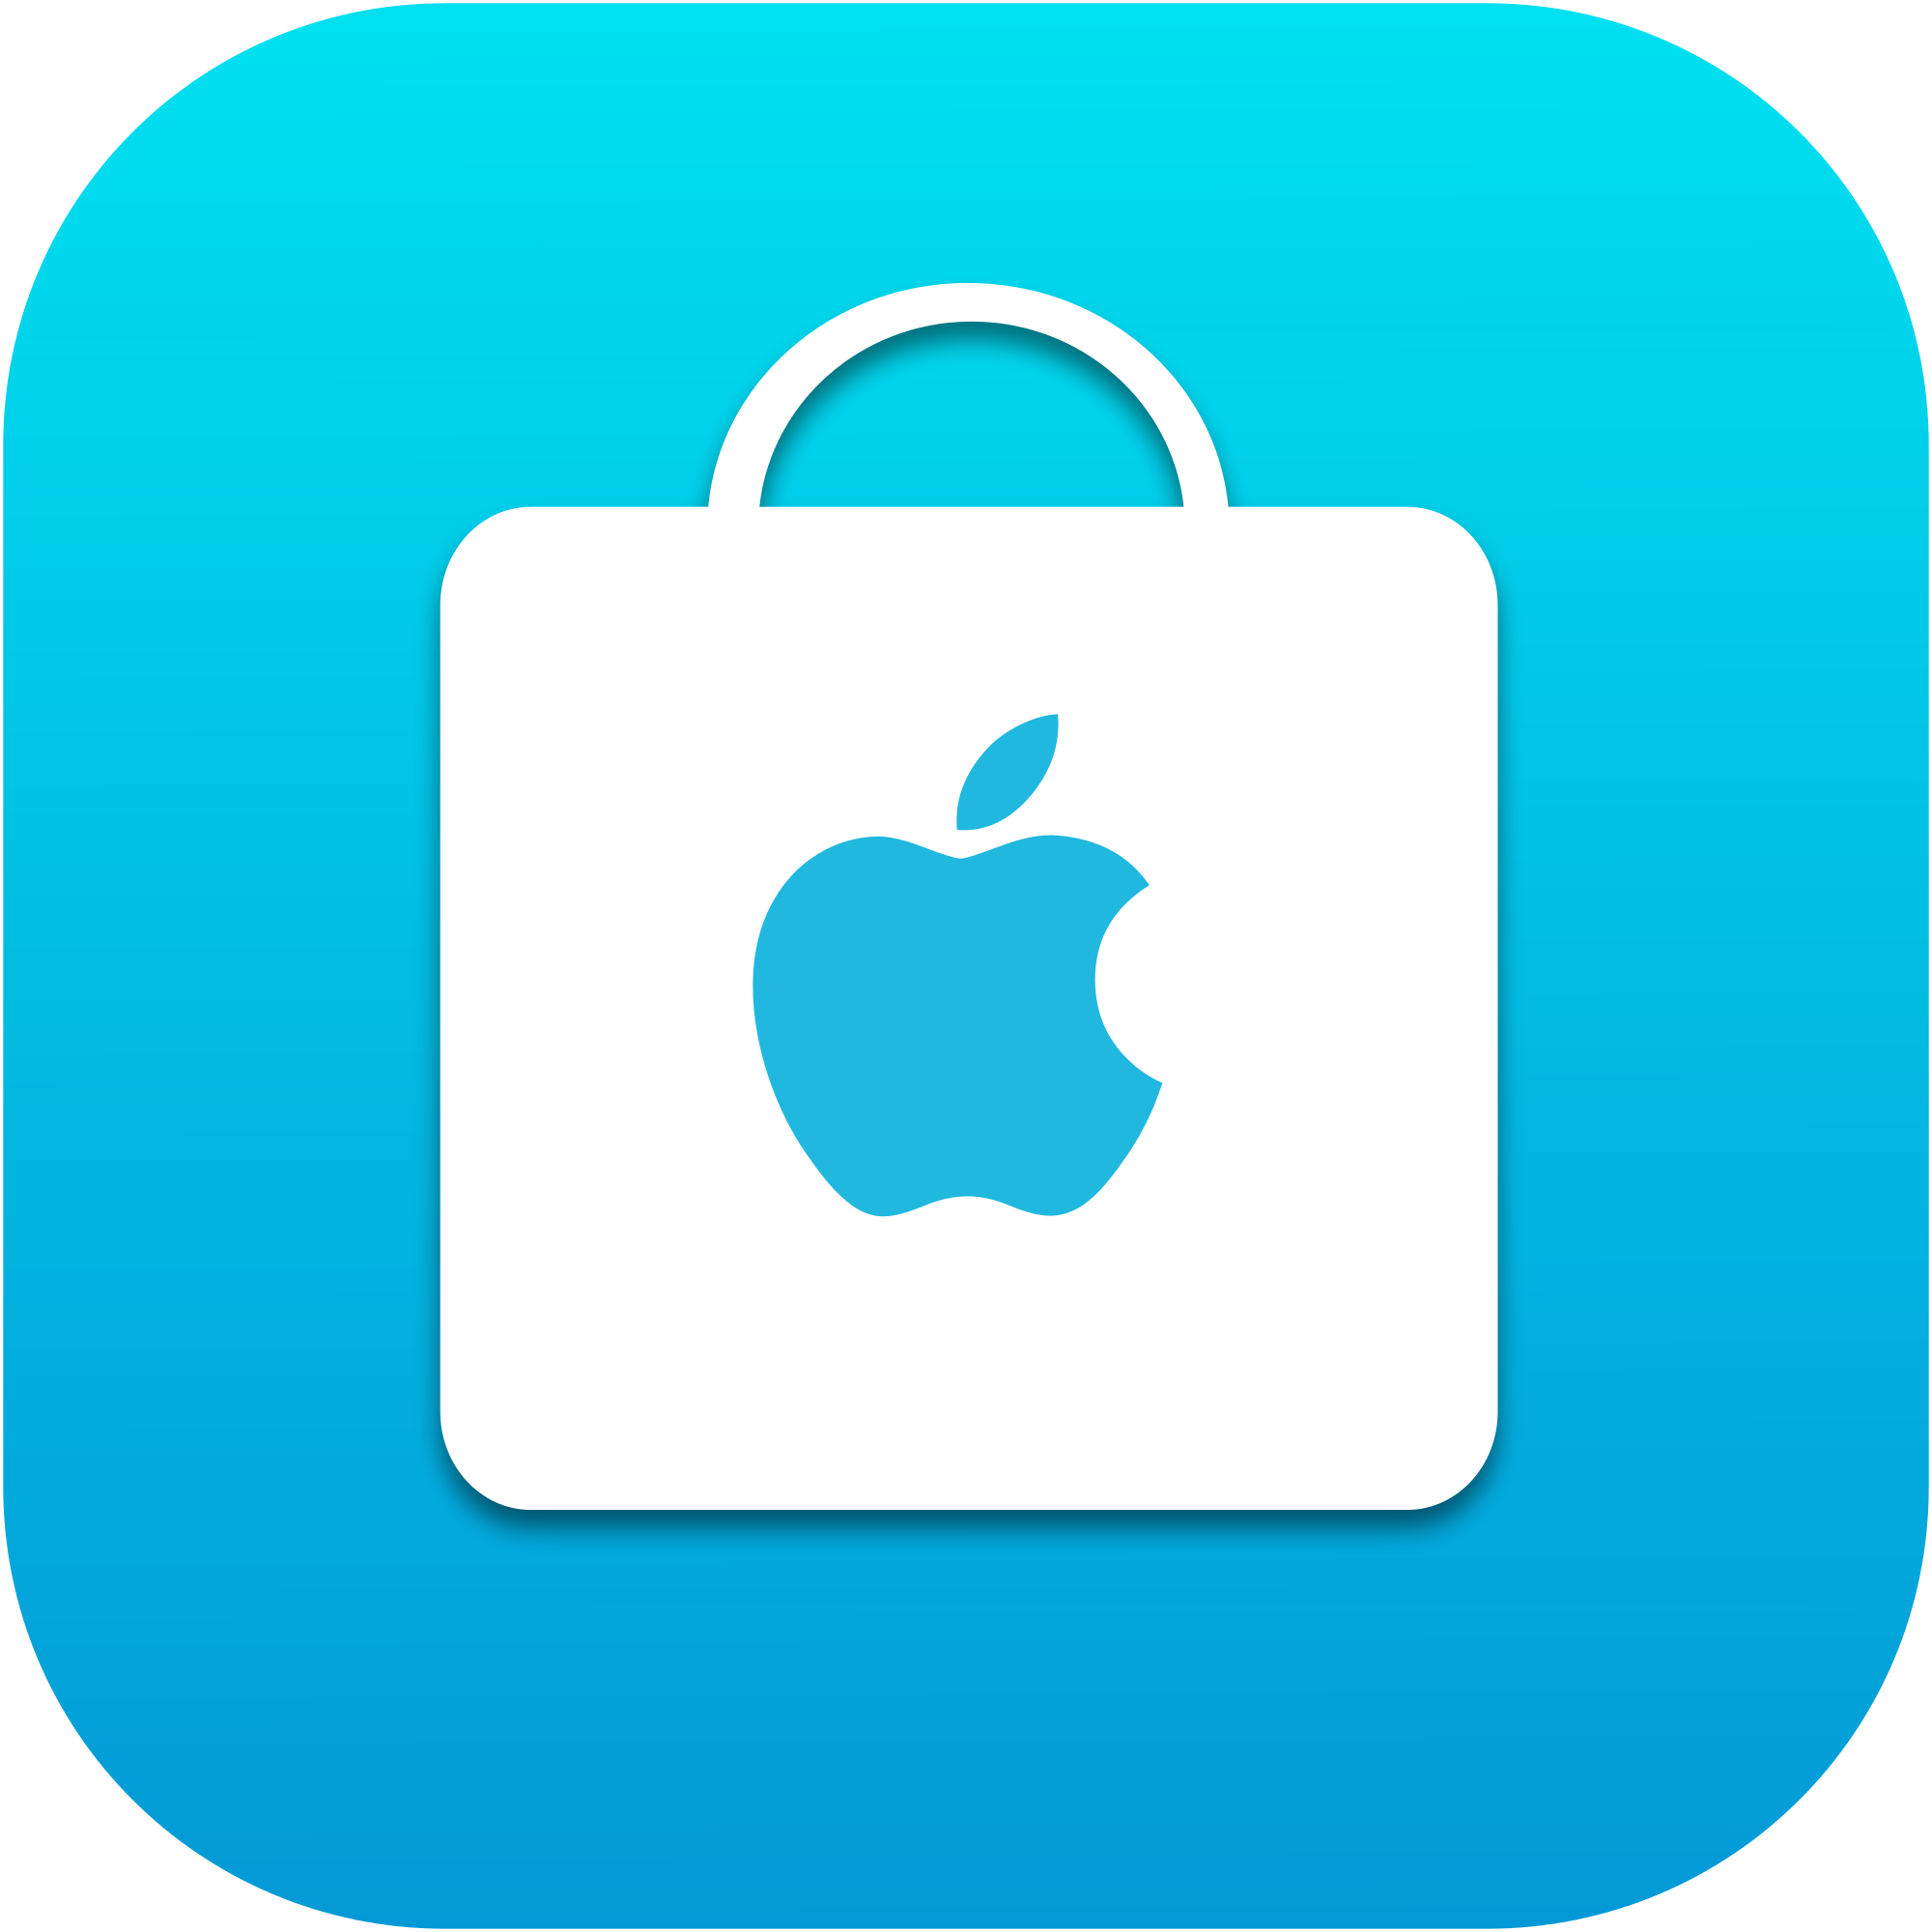 App store интернет. Иконки приложения эйплстор. Apple app Store. Apple app Store приложения. Значок Apple Store айфон.